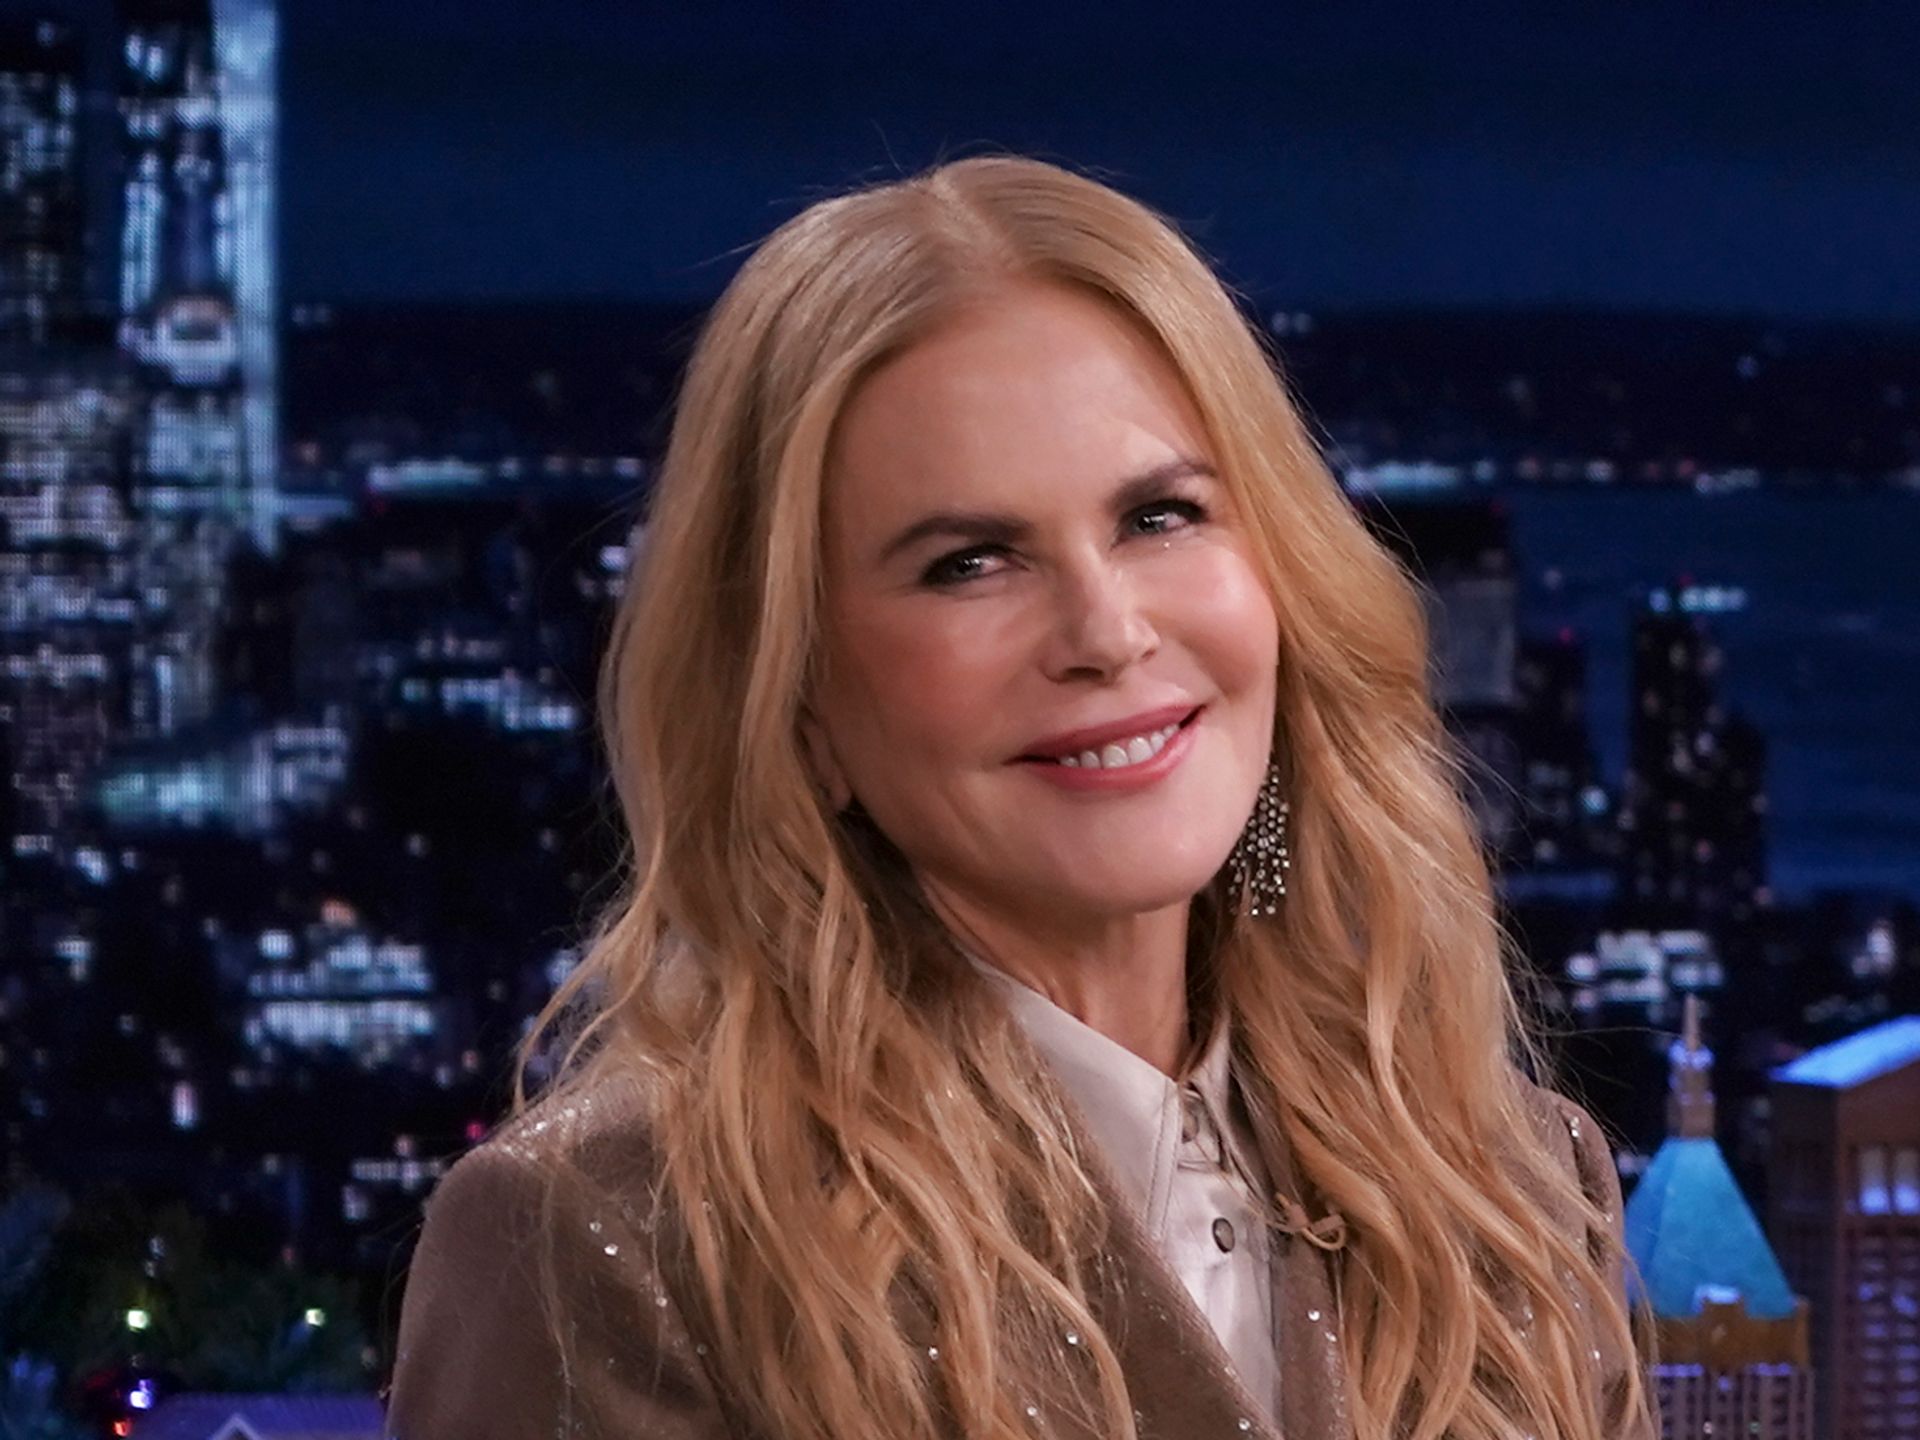 Nicole Kidman's Oscar dress transformed halfway through the night